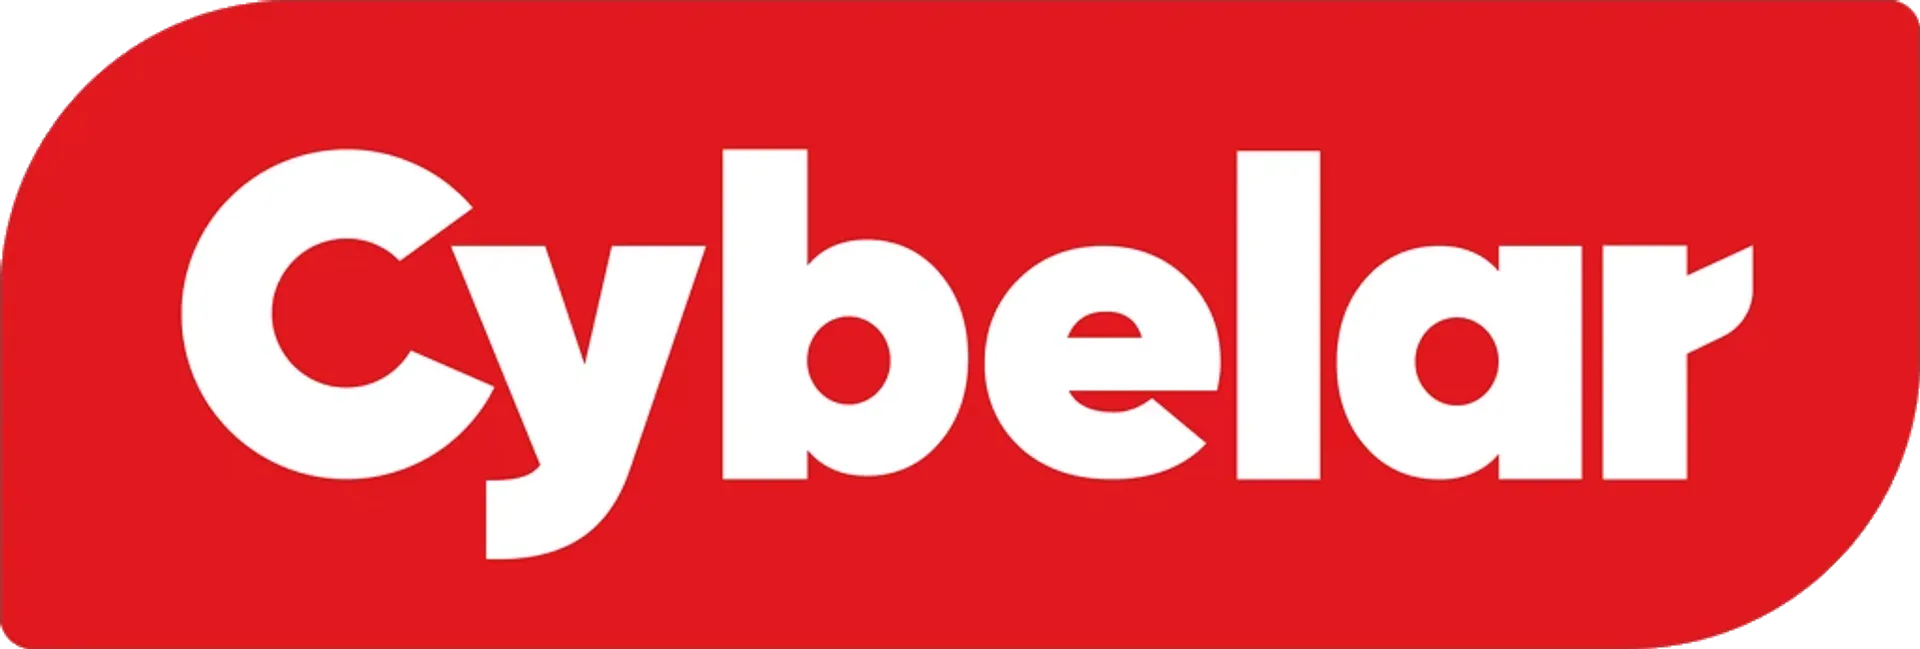 CYBELAR logo